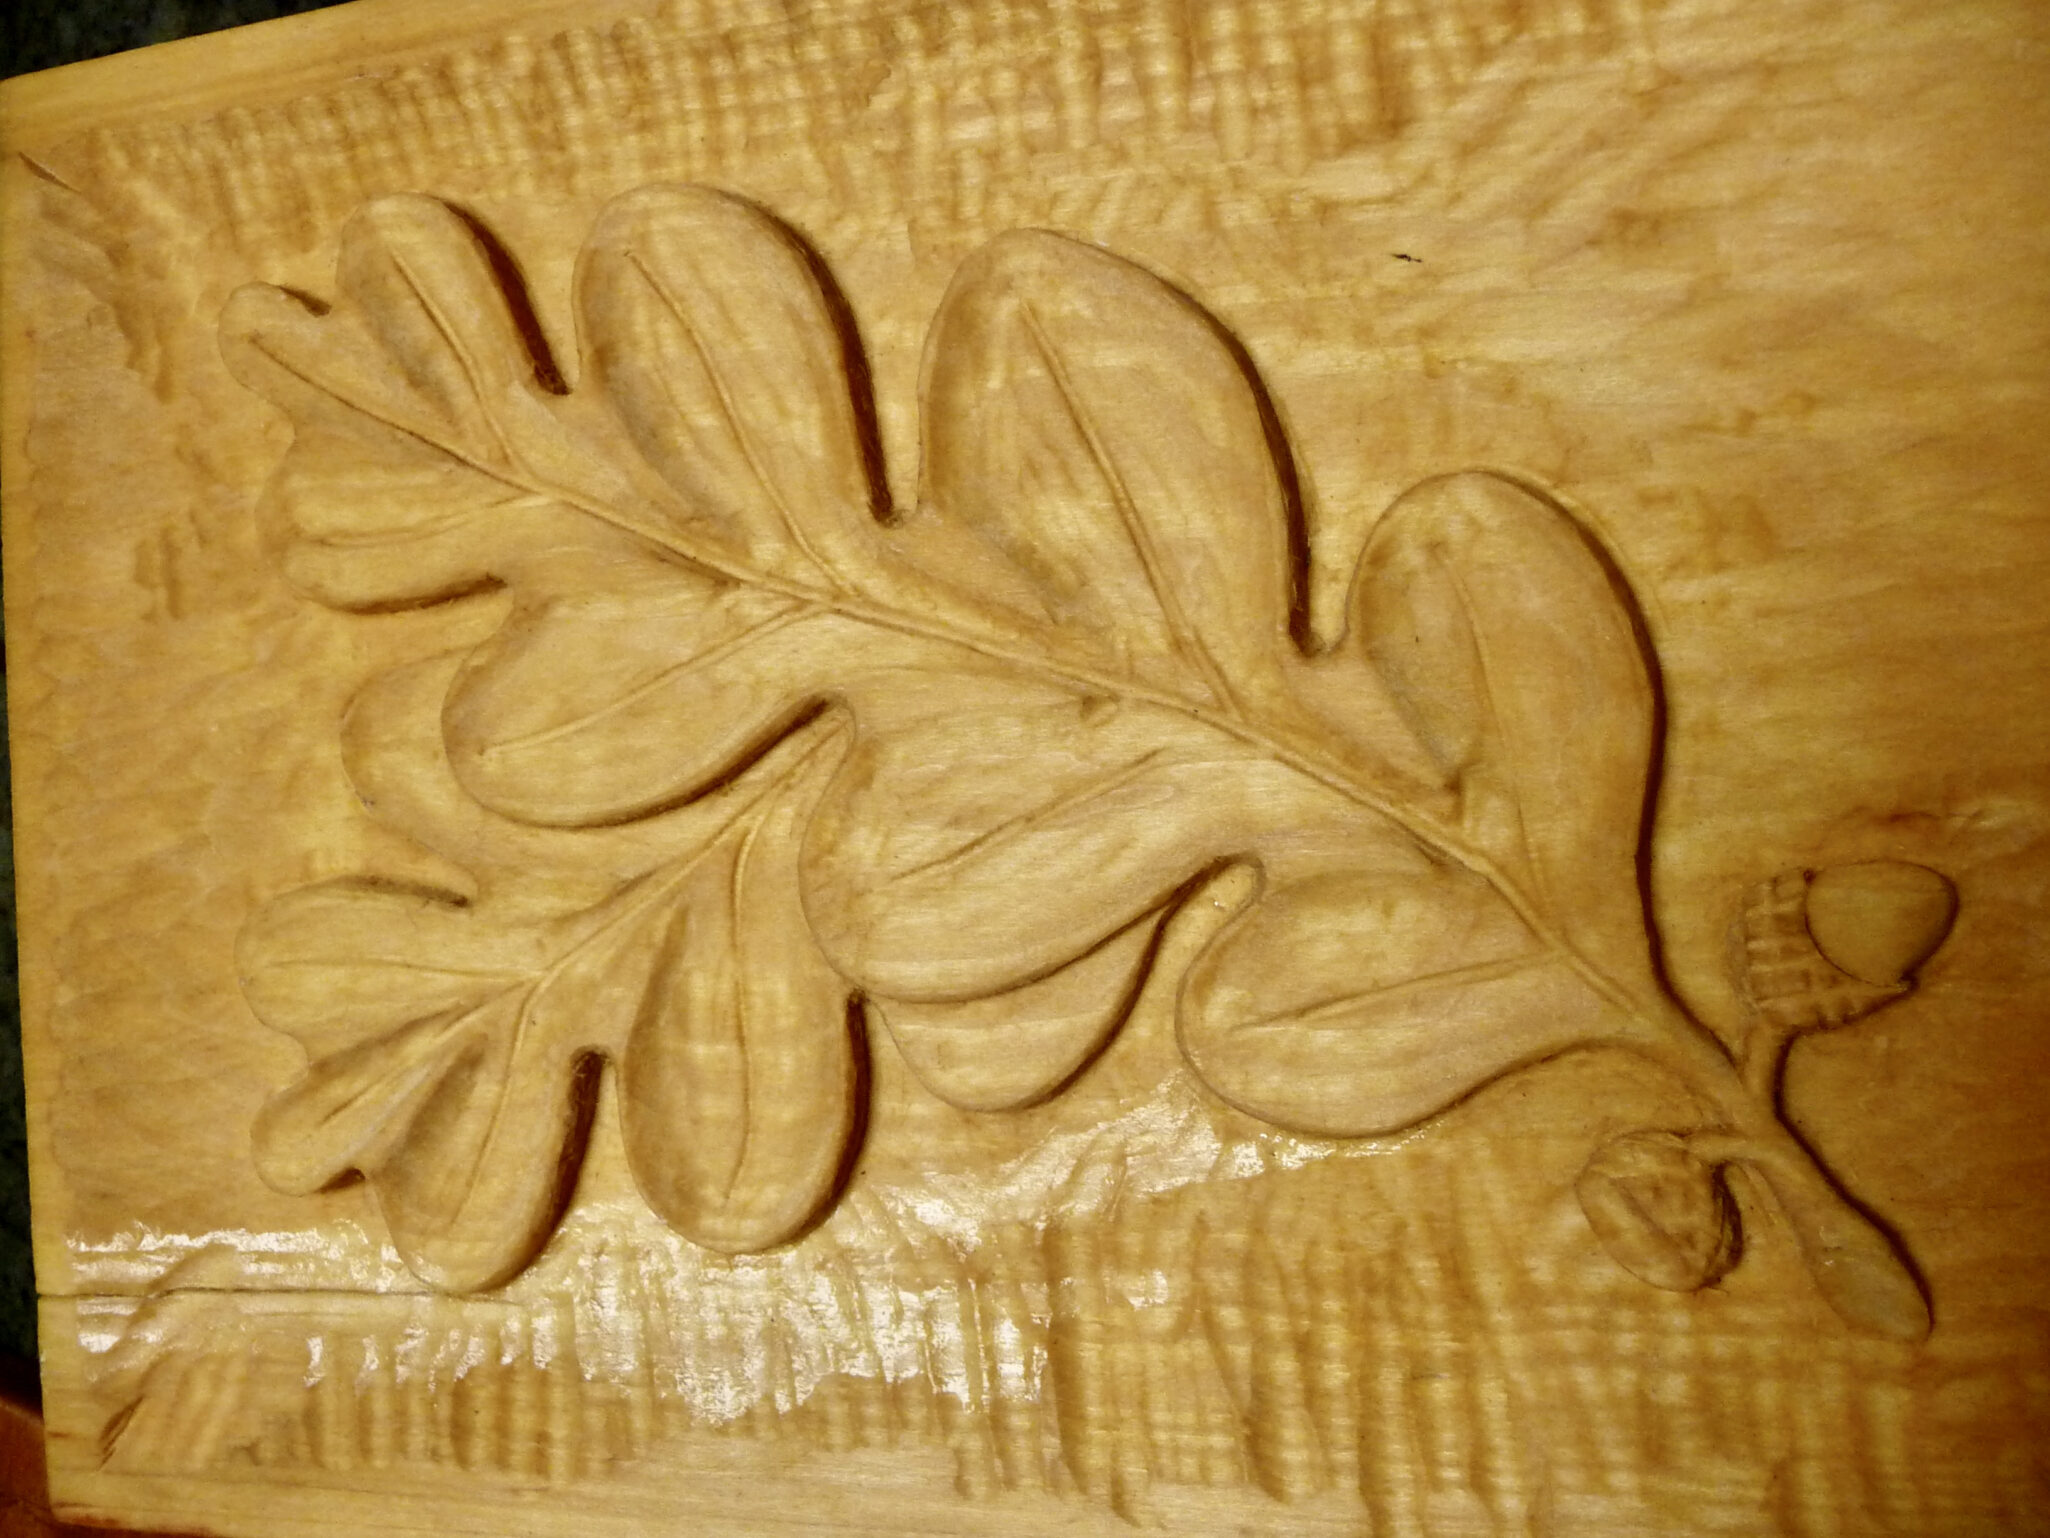 Trillium Woods Resident Felix Tristani's wood carving